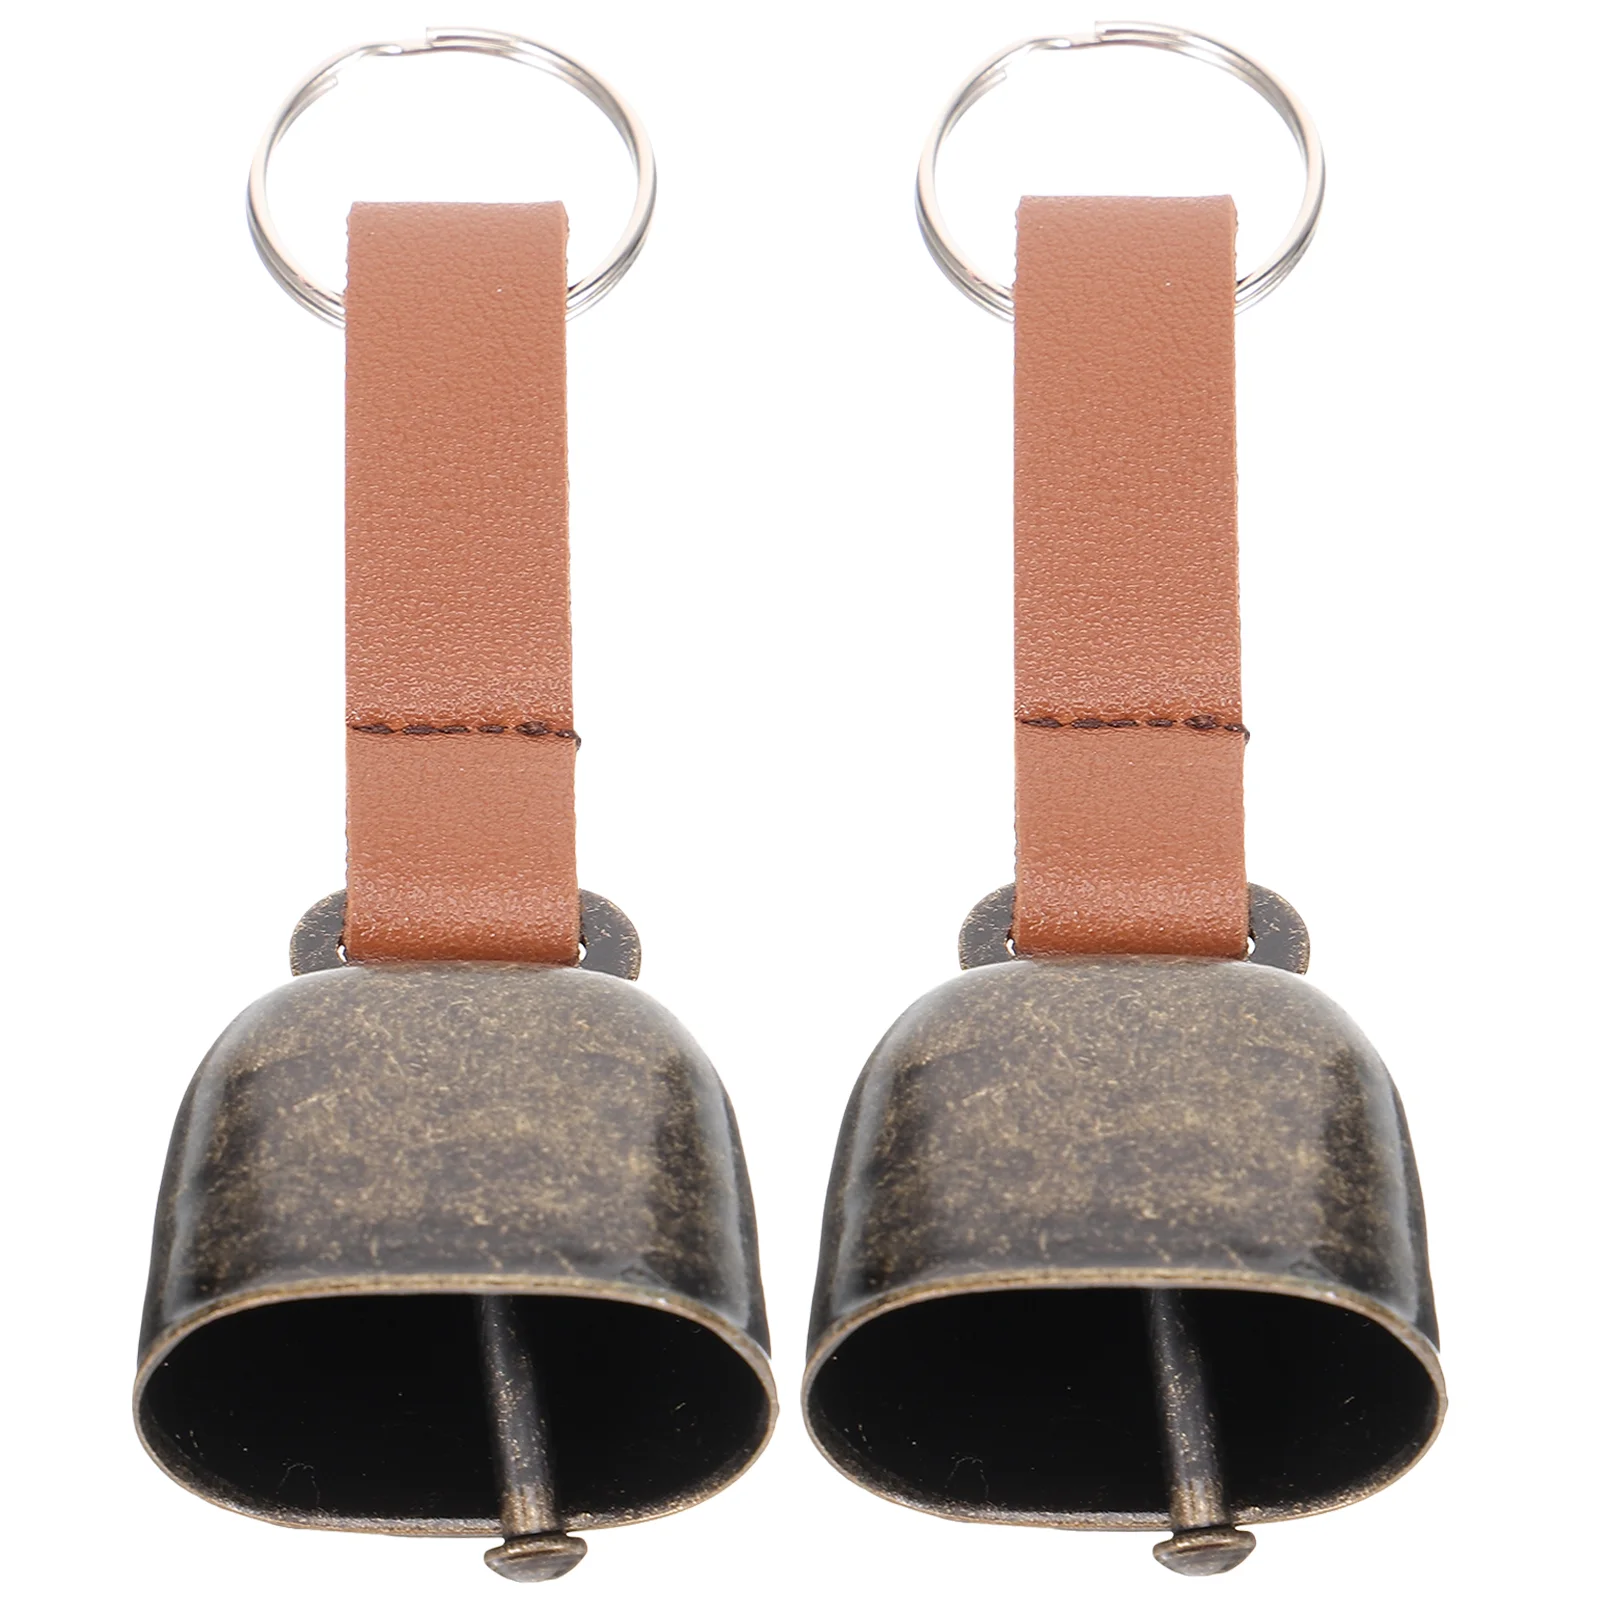 

2 Pcs Bear Repelling Bell Metal Camping Bells Outdoor Gear Pendant Travel Brass